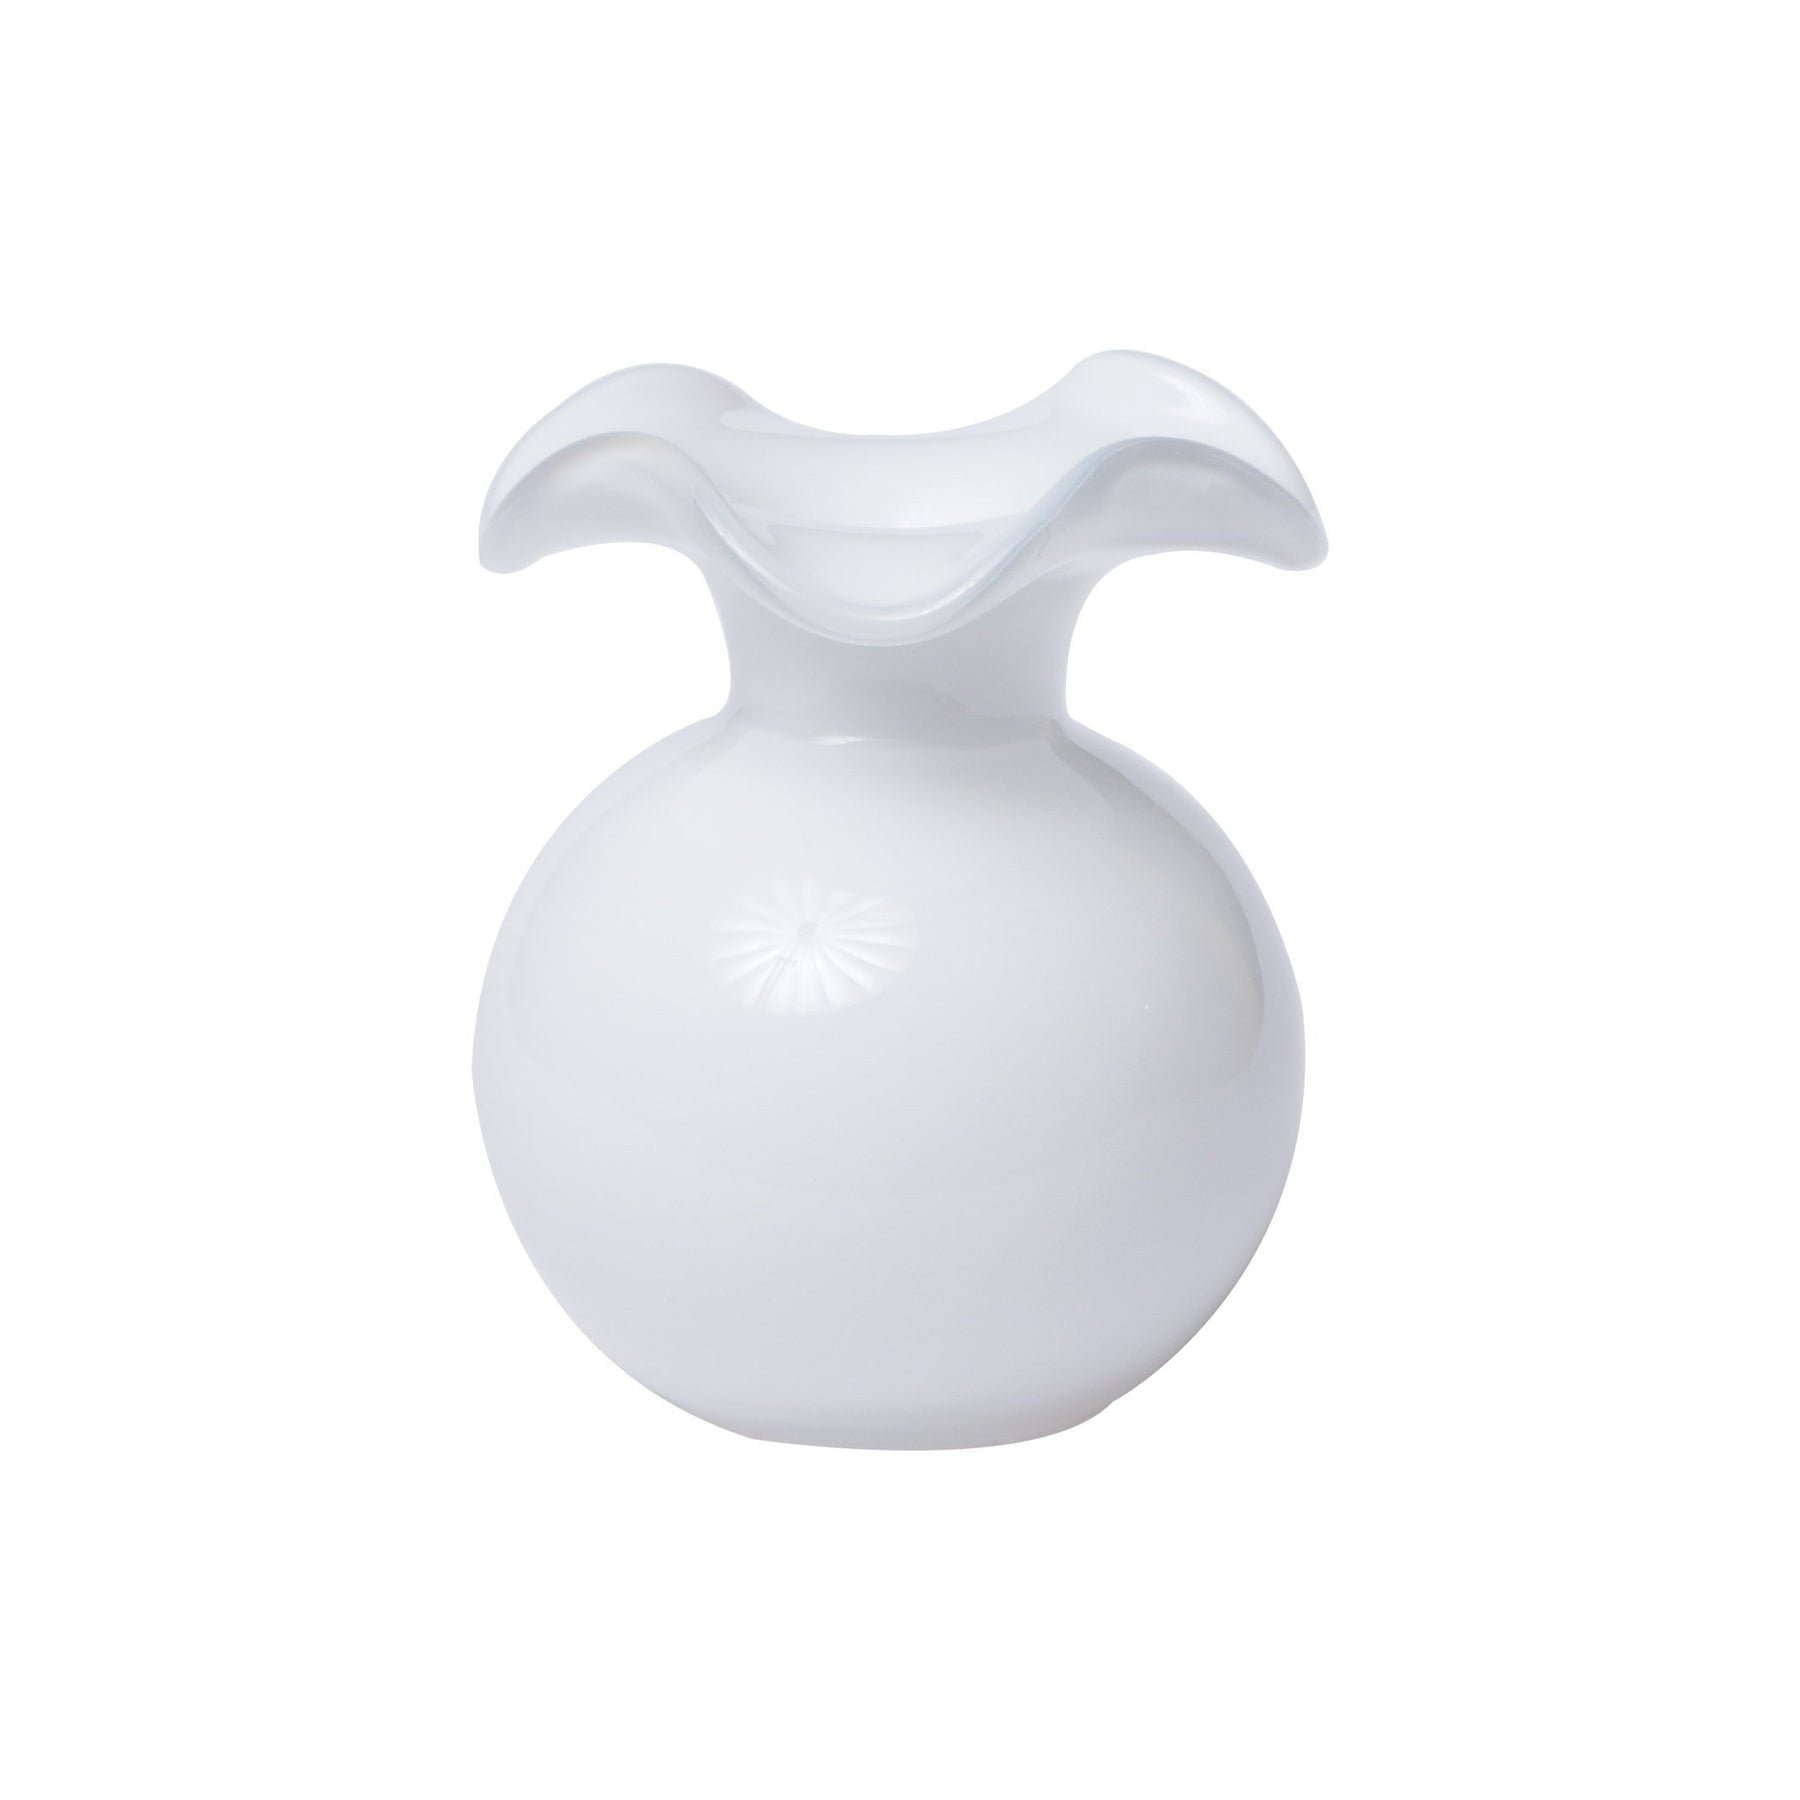 29831 - White Hibiscus Fluted Bud Vase - $65